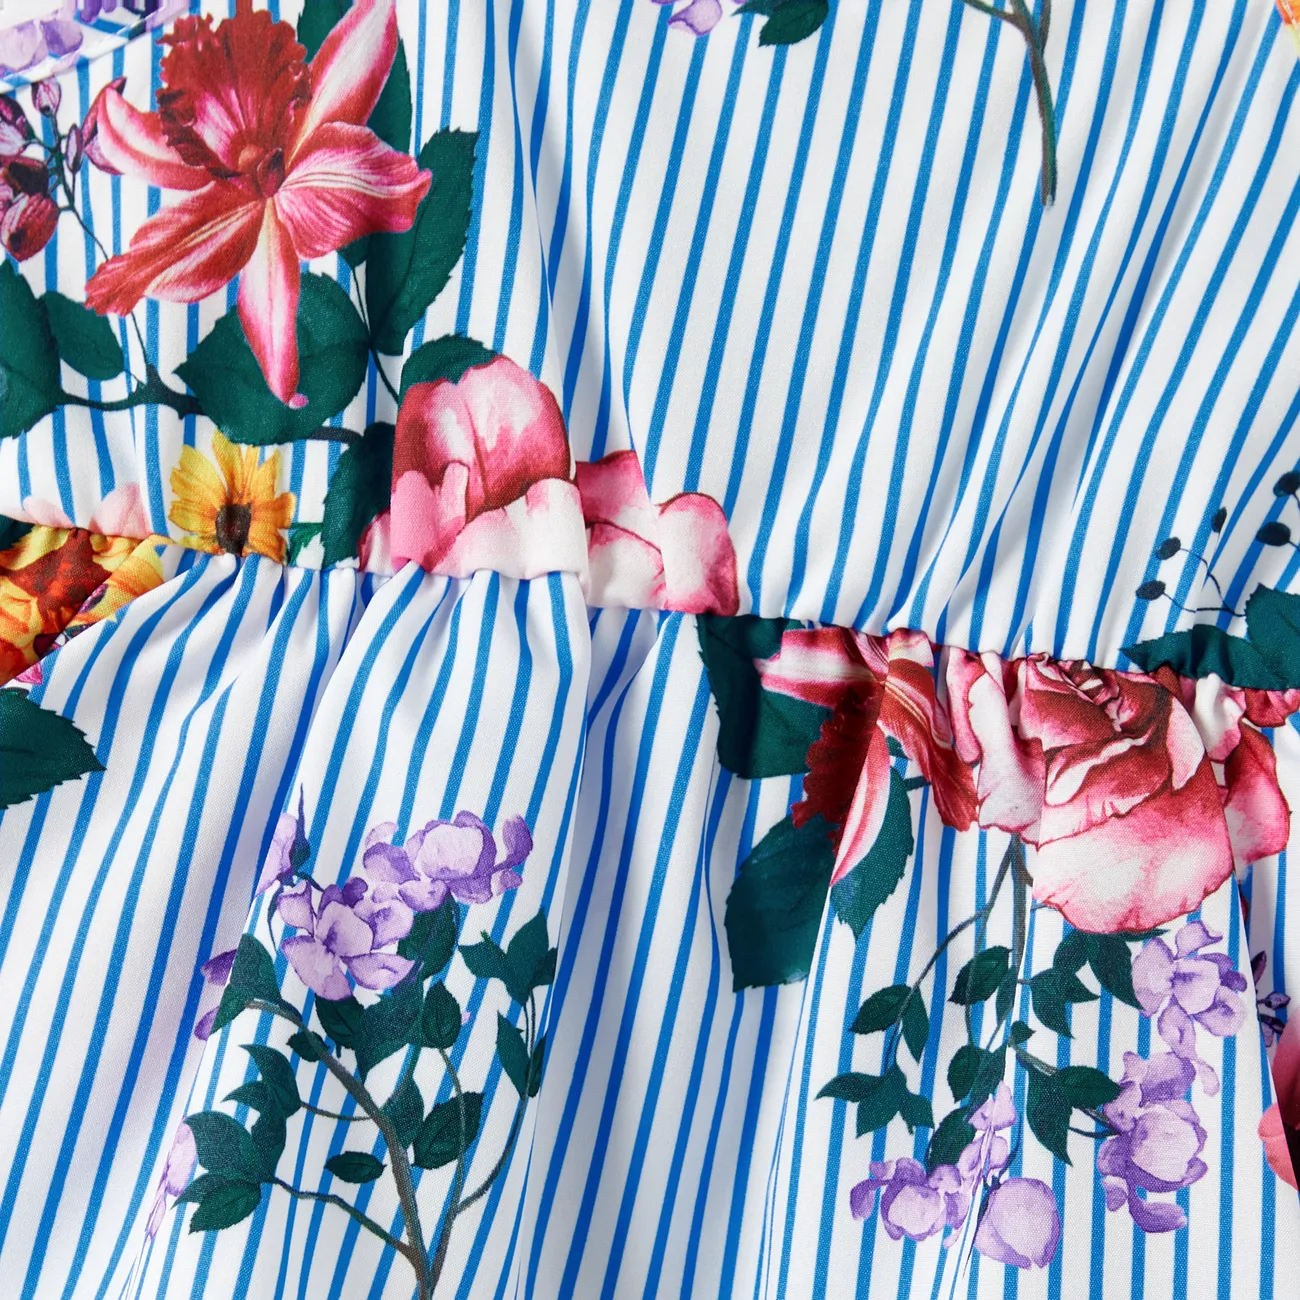 Family Matching Sets Denim Blue Short-Sleeve Shirt and Floral Print Shirred Top Strap Dress  DENIMBLUE big image 1